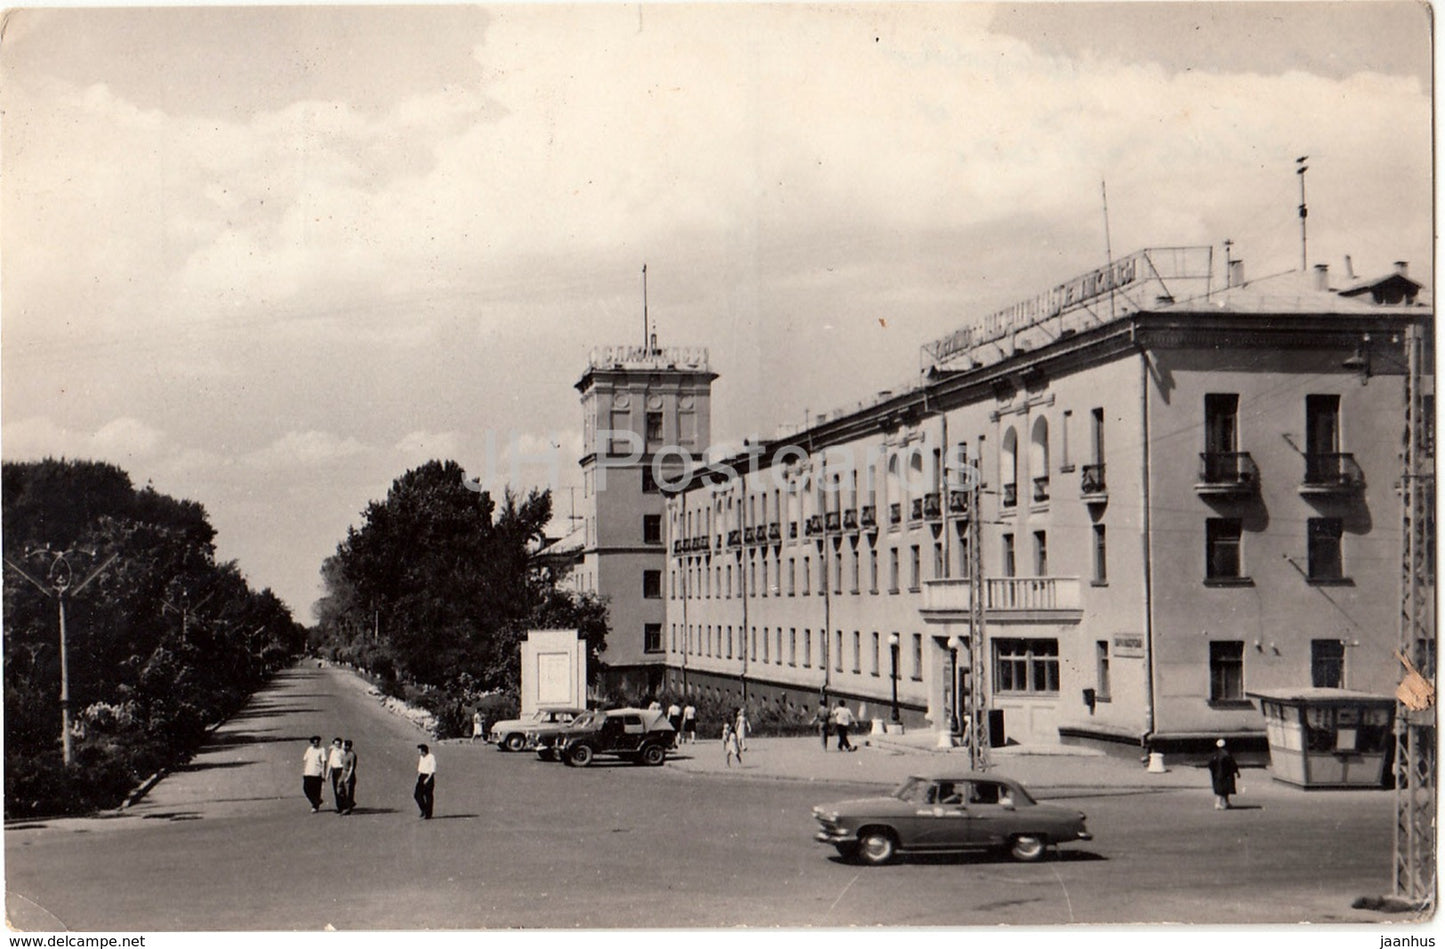 Bishkek - Frunze - Ala-Too hotel - car Volga - photo postcard - Kyrgyzstan USSR - used - JH Postcards